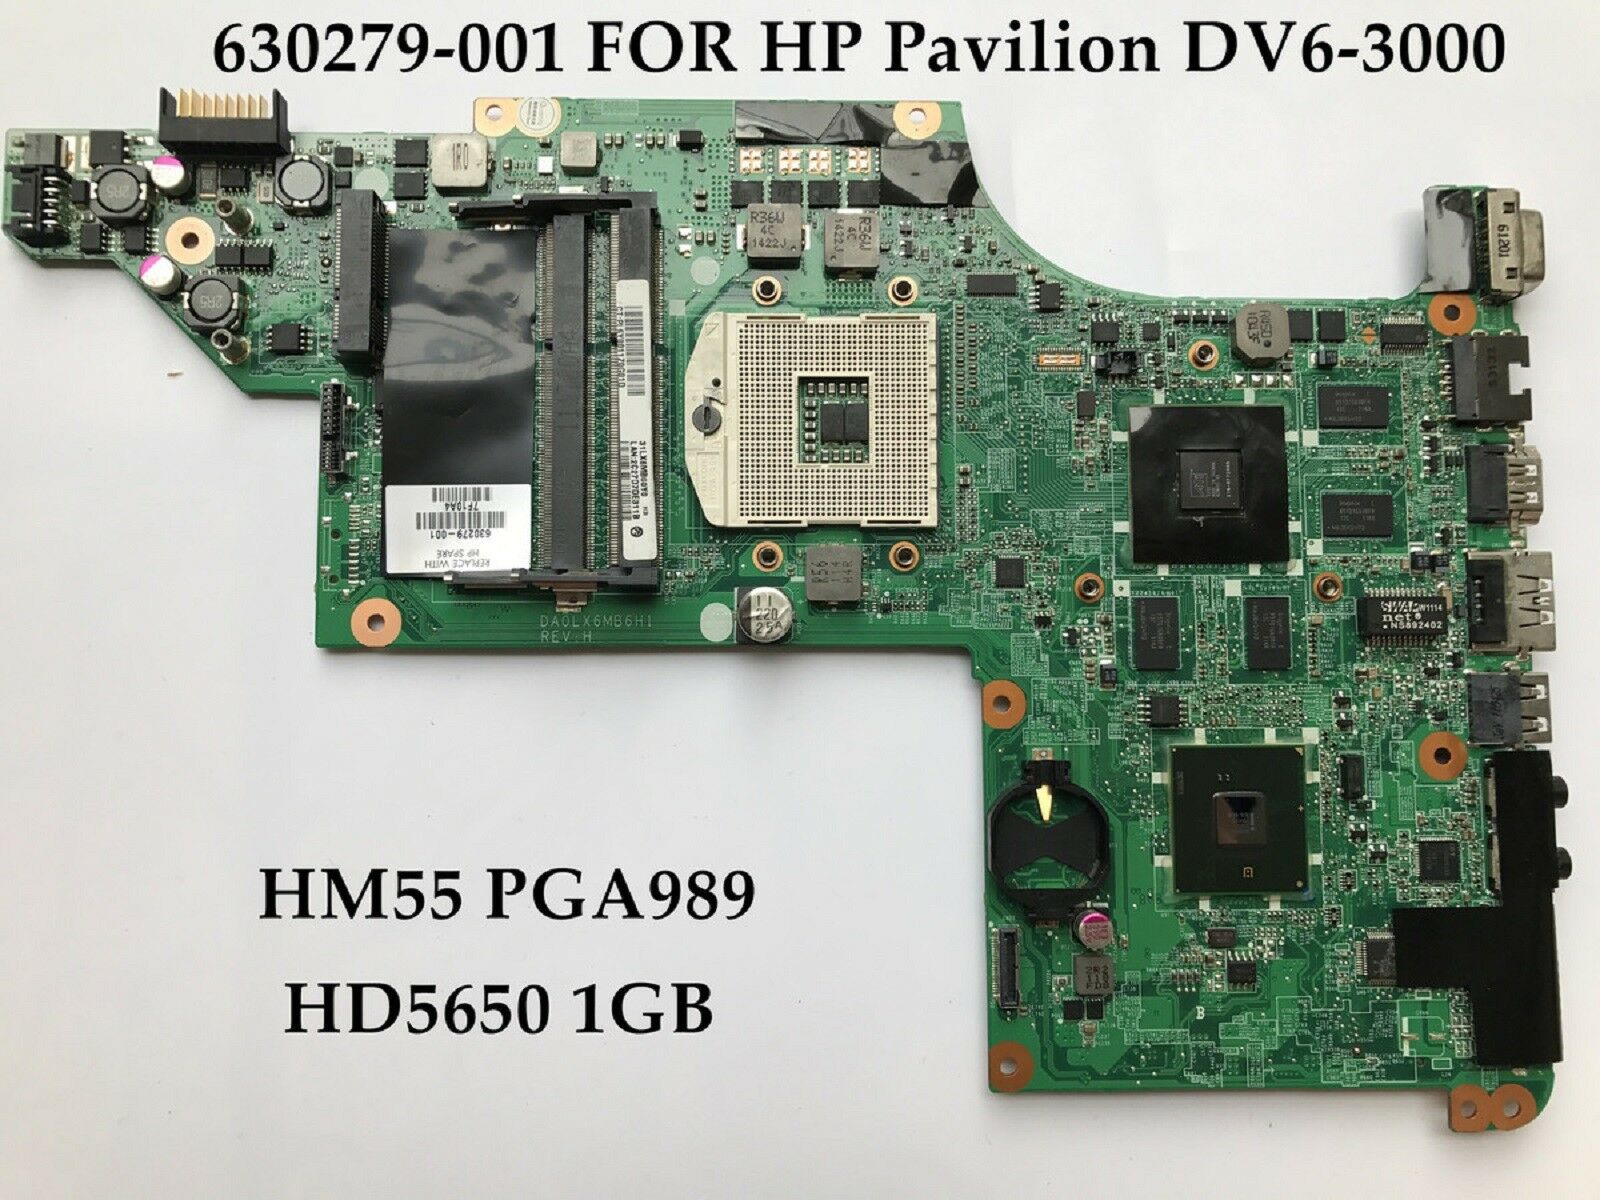 HP DV6 DV6T DV6-3100 Series Intel HM55 5650/1G Motherboard 630279-001 Test Good Compatible CPU Brand: Intel